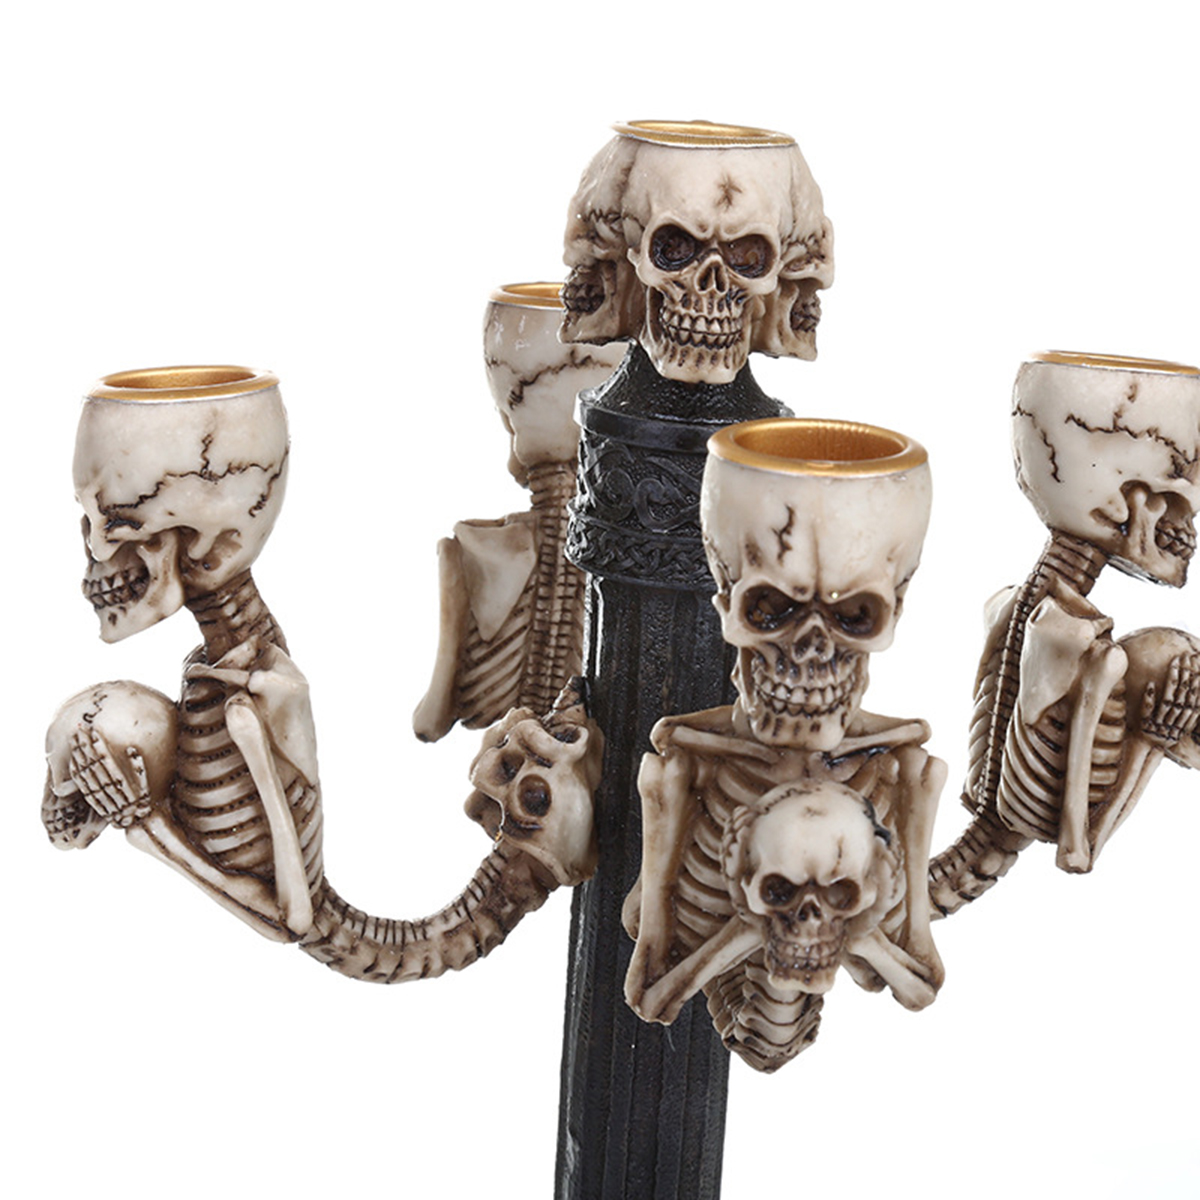 Resin-Craft-Statues-Skull-Candlestick-Creative-Figurines-Sculpture-Decorations-1348242-2